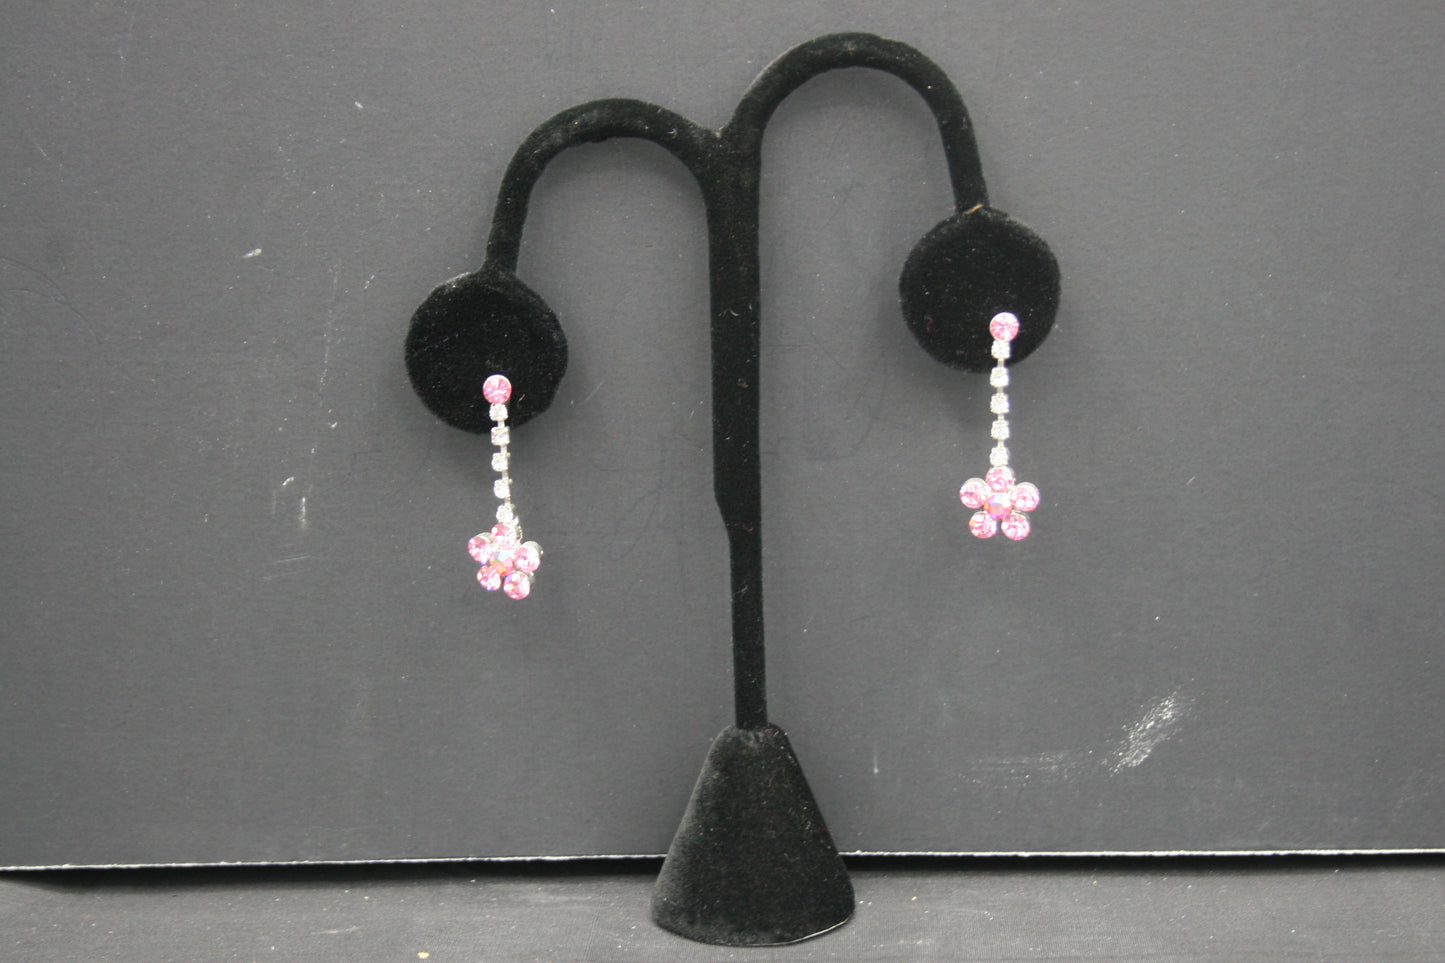 Flower Rhinestone Earrings